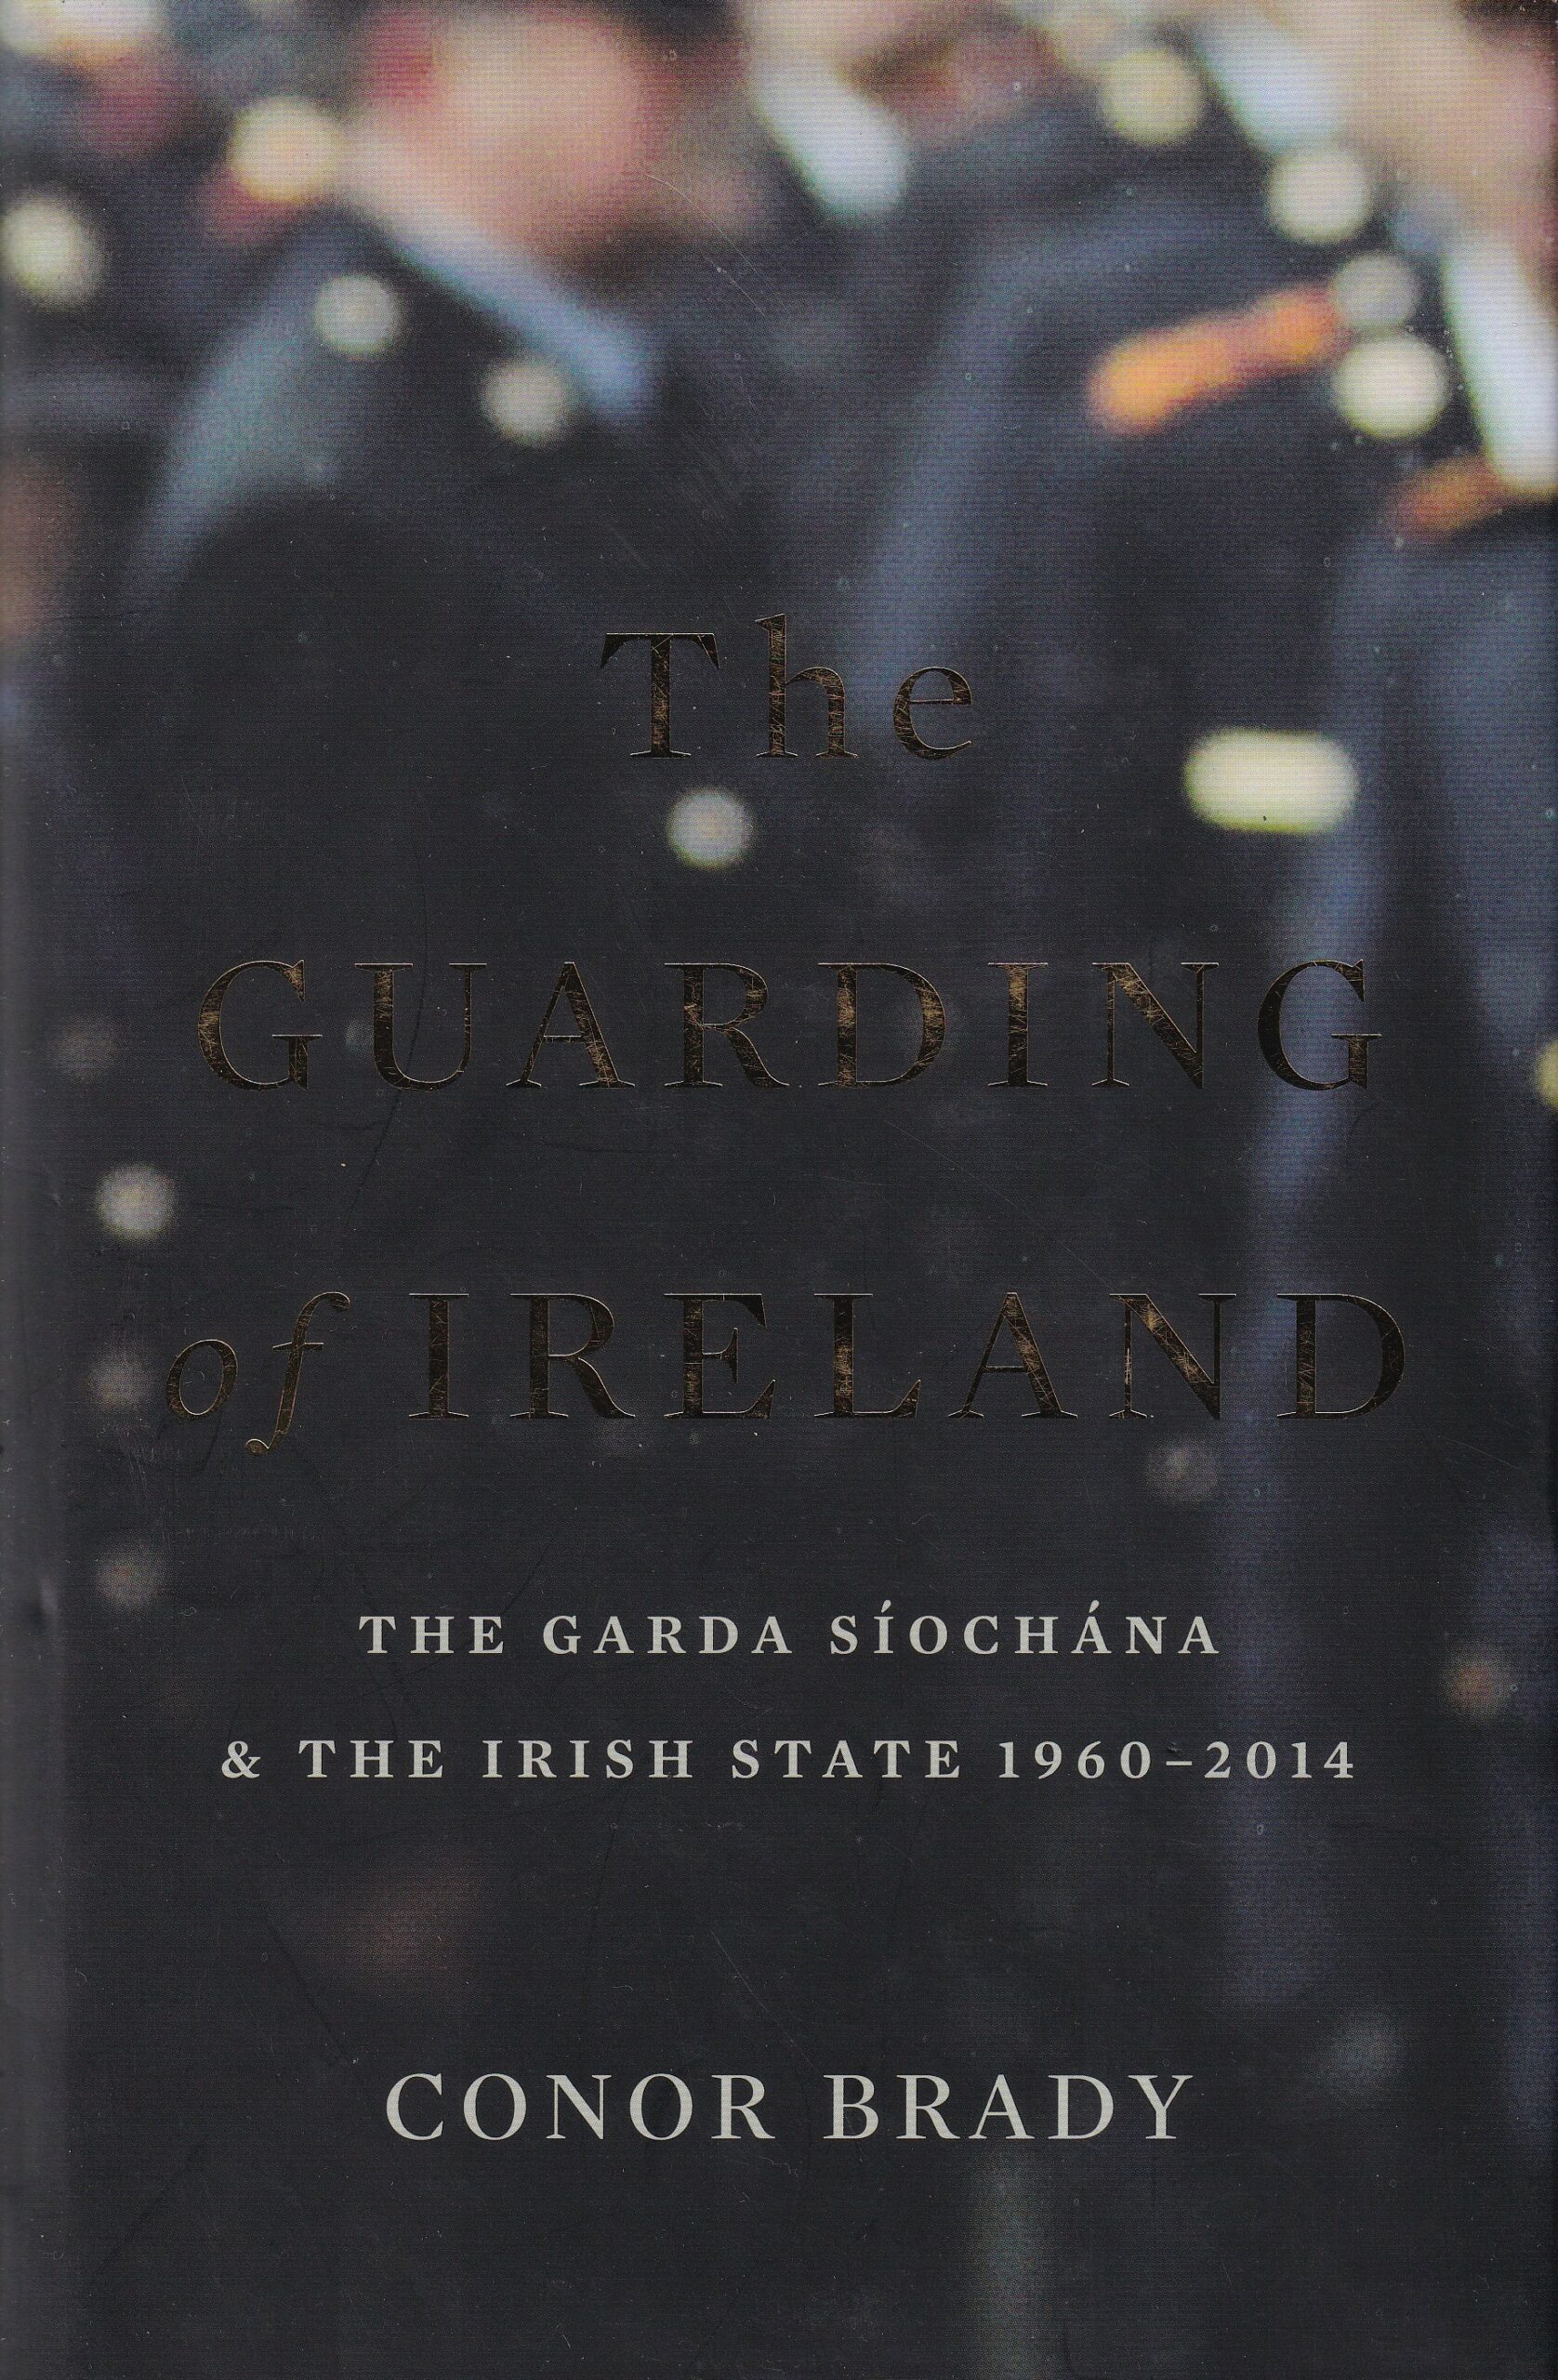 The Guarding of Ireland: The Garda Síochána and the Irish State 1960-2014 by Conor Brady